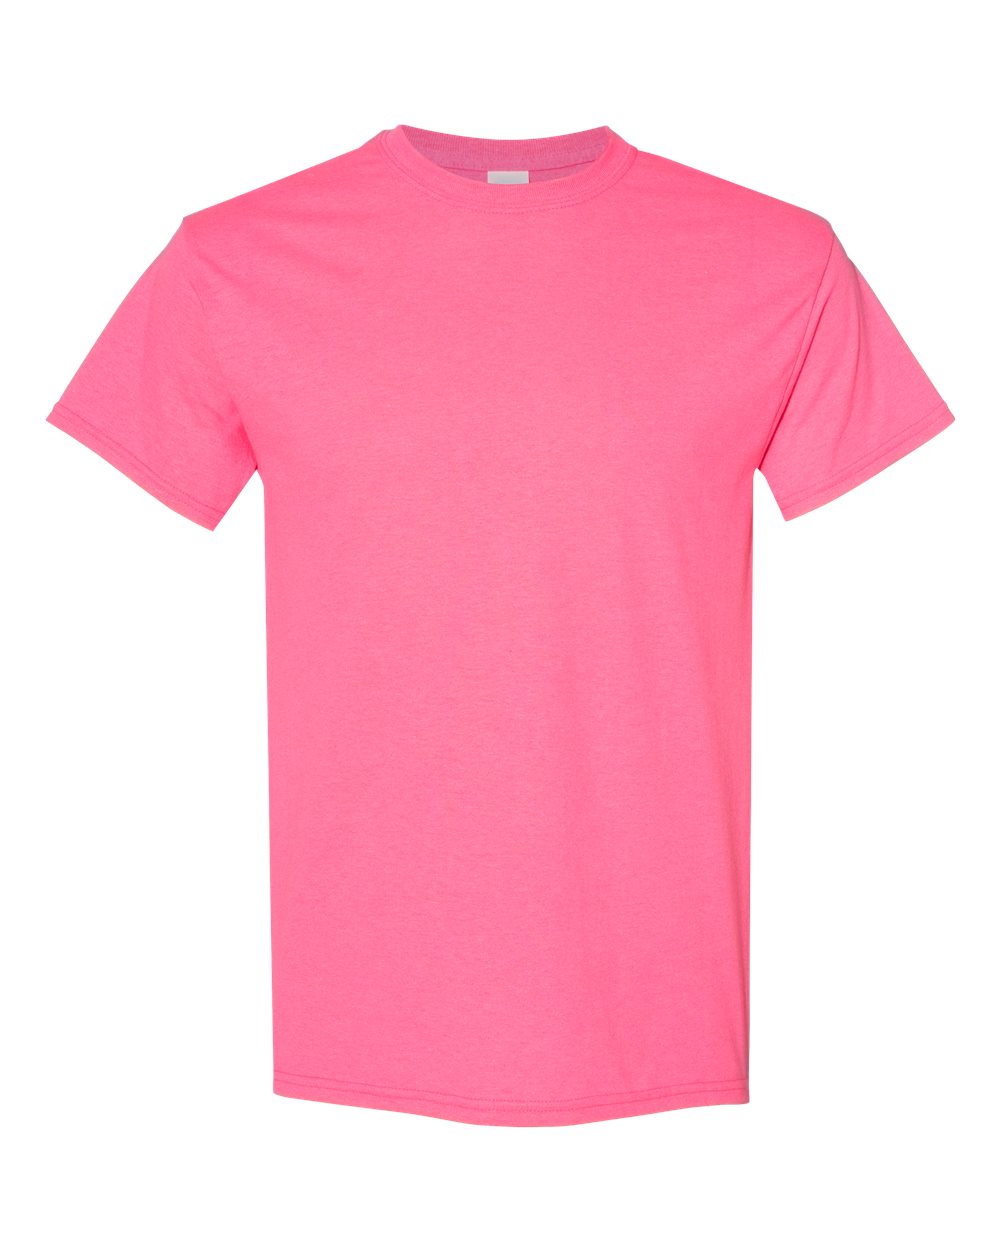 Pretreated Gildan 5000 Heavy Cotton T-Shirt - Safety Pink